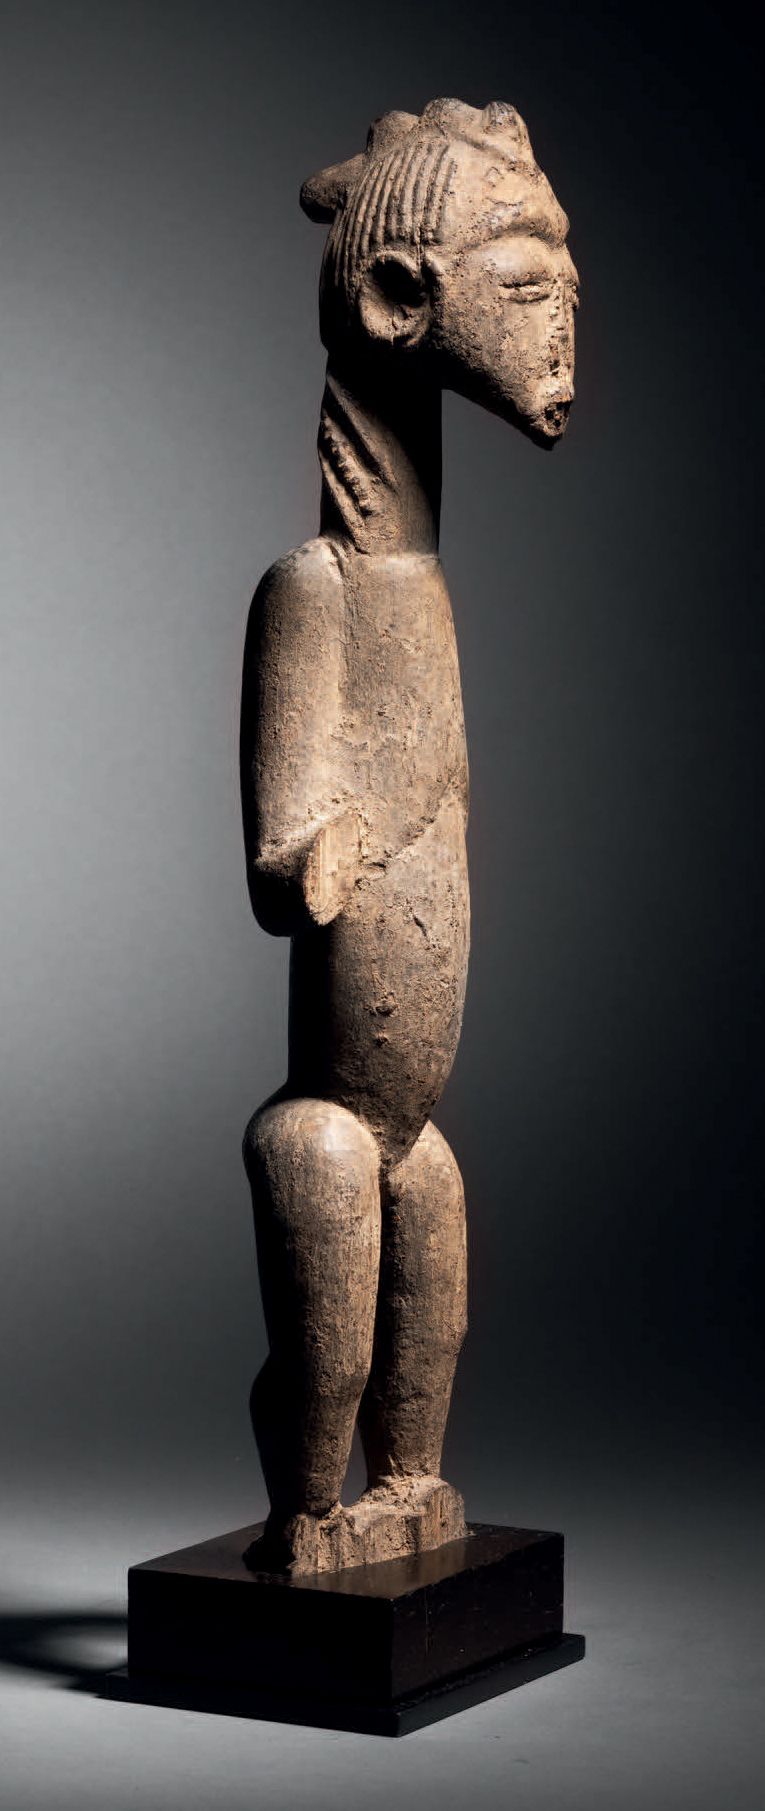 Null Statue, Baule, Ivory Coast
Wood with grey crusty patina
H. 41,5 cm
Baule fi&hellip;